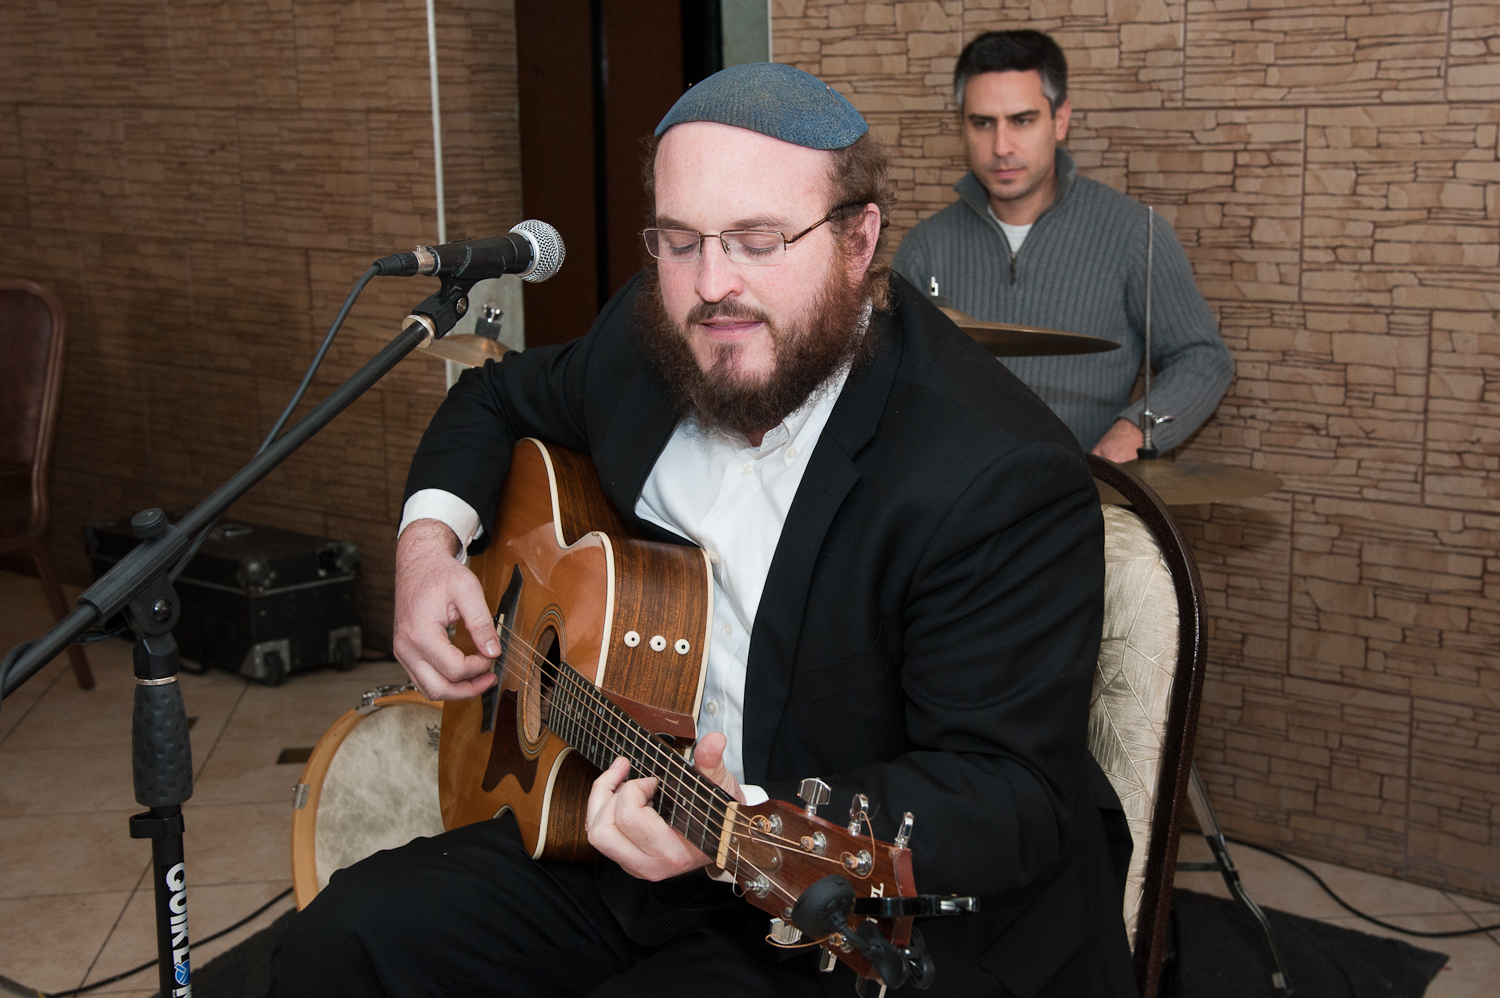 Prospective students were treated to the music of Shlomo Katz.